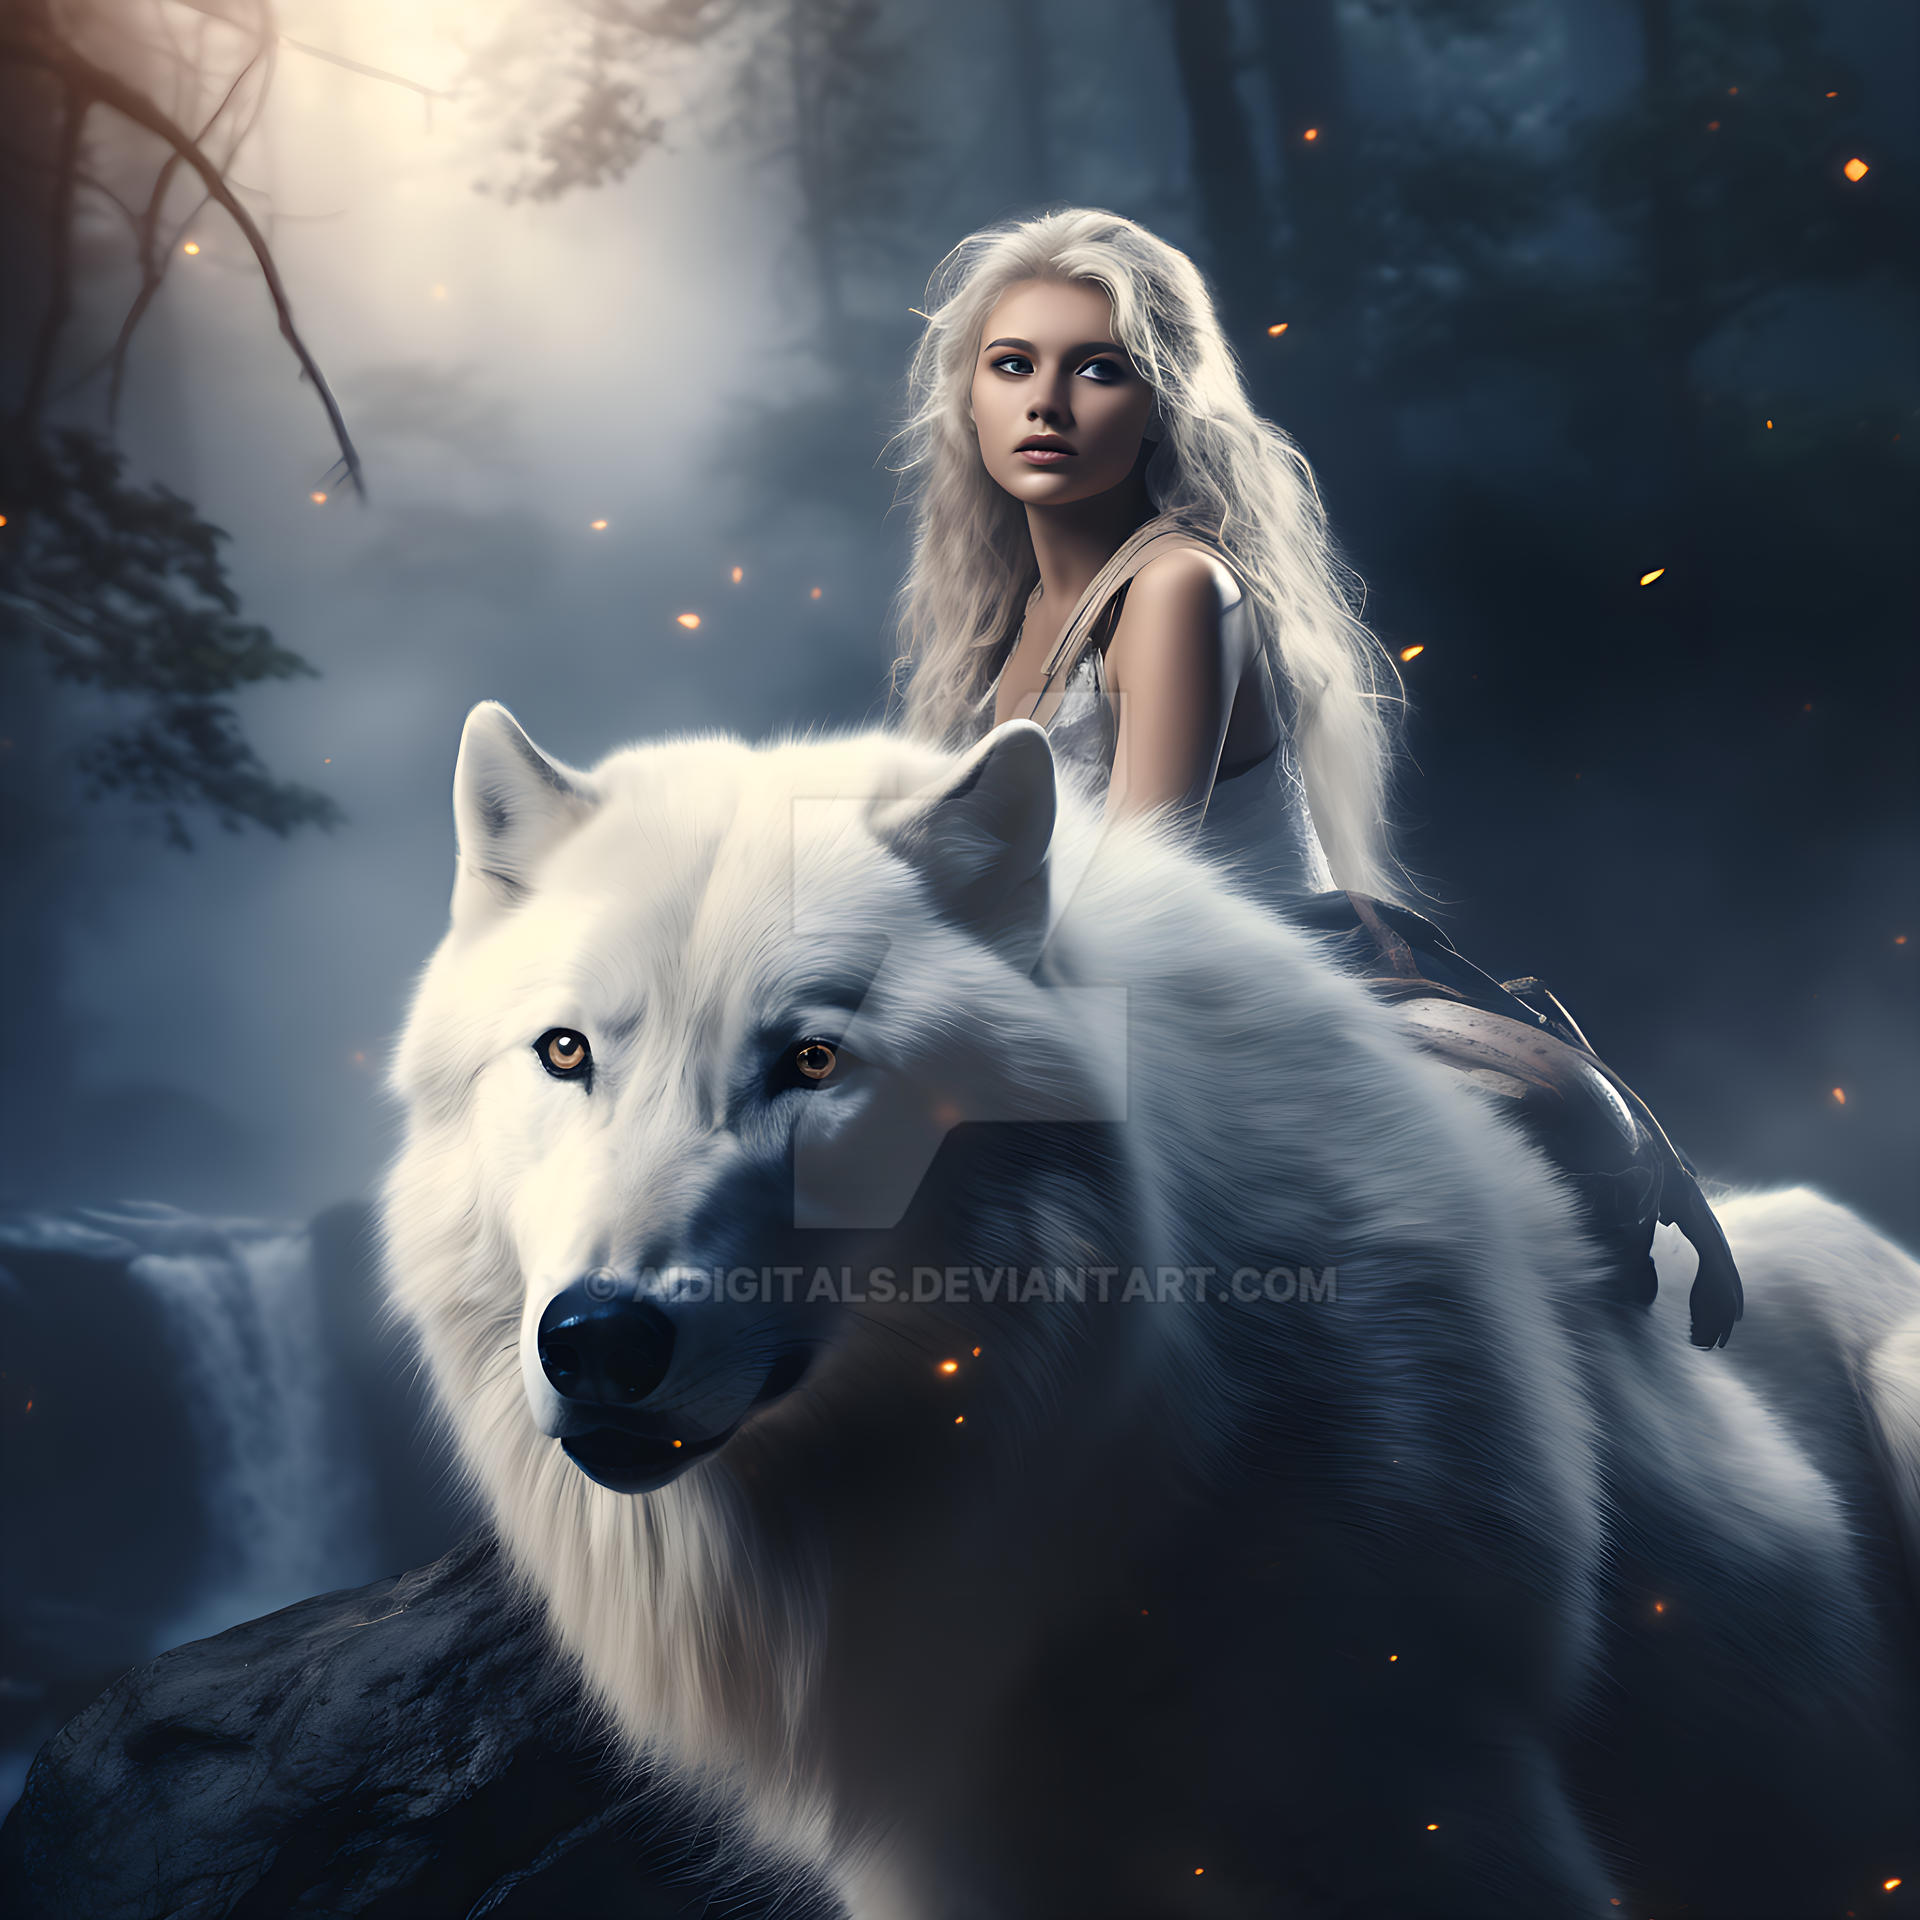 Cute Wolf girl Liandra by AiDigitals on DeviantArt